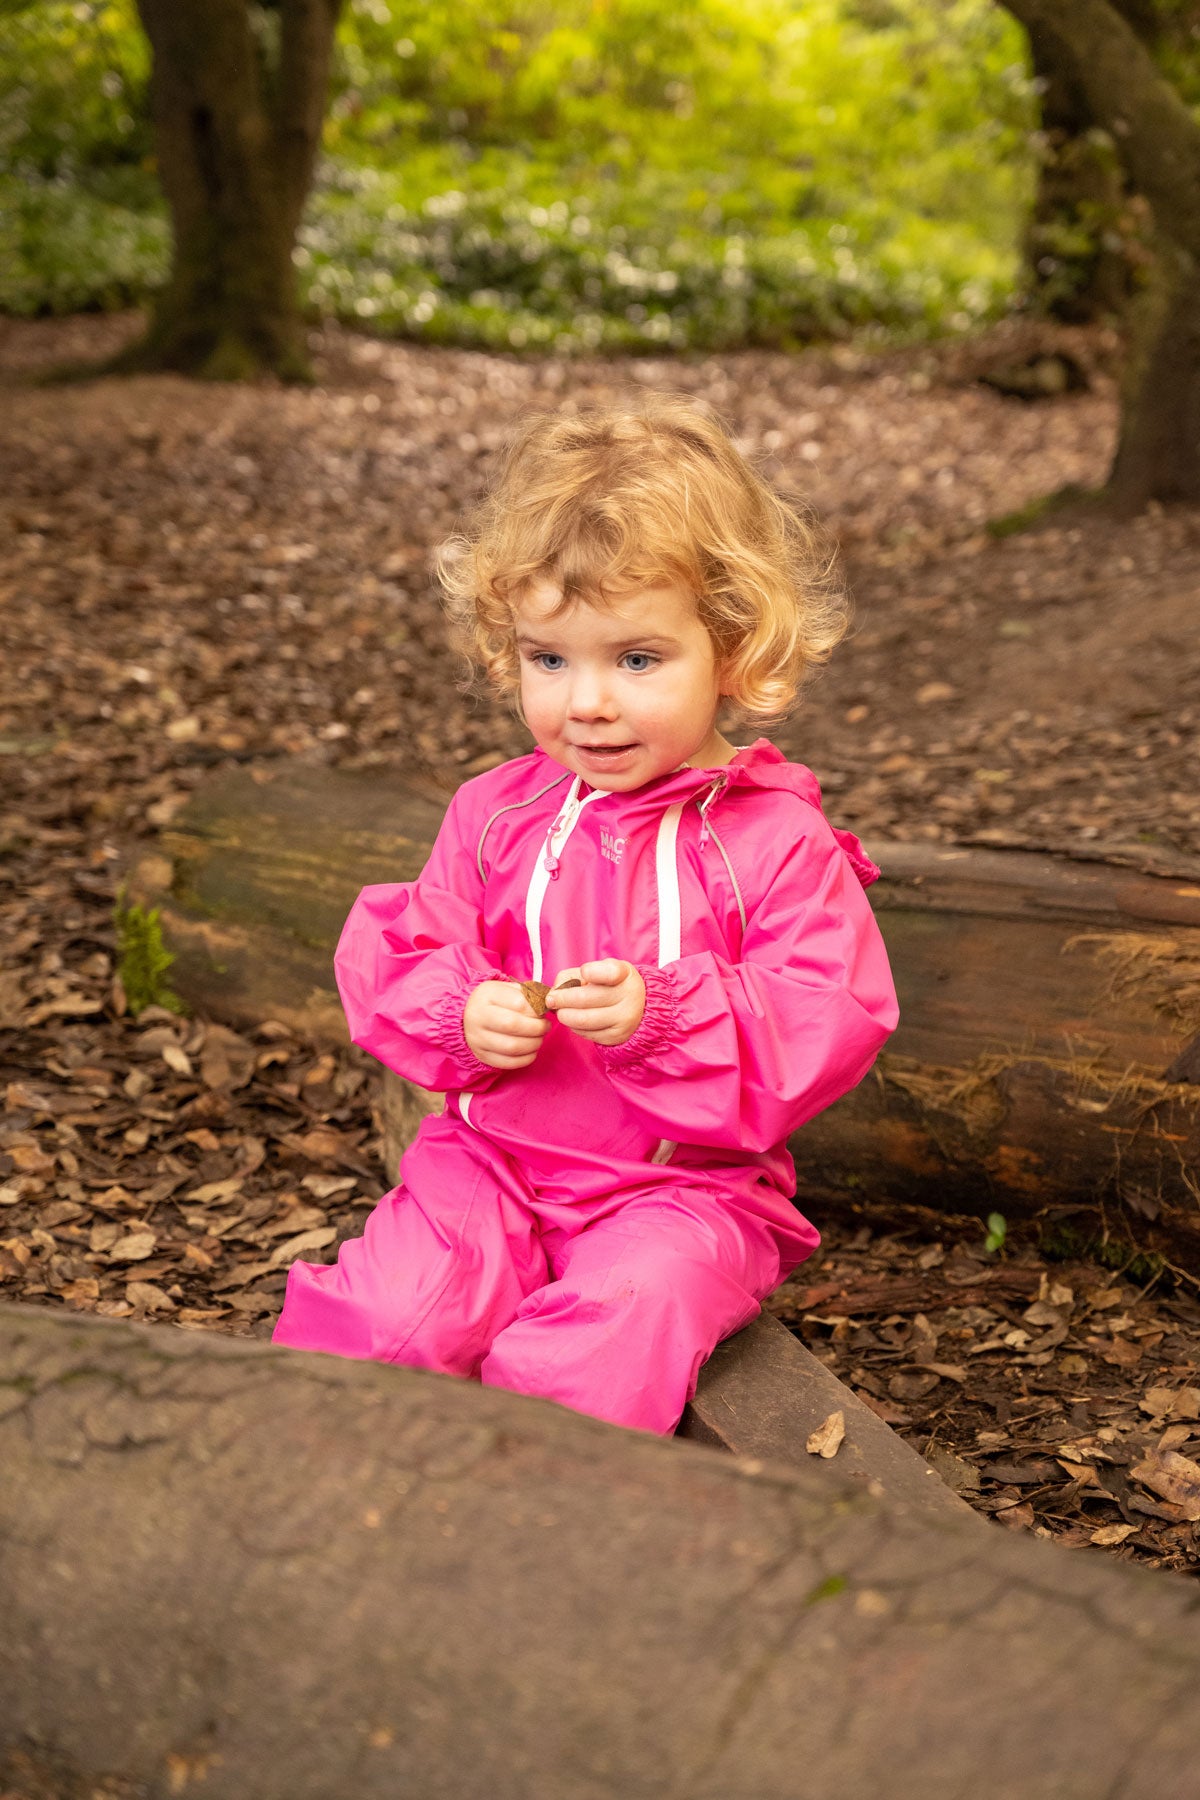 Puddlesuit Packable Waterproof Kids Rainsuit - Pink